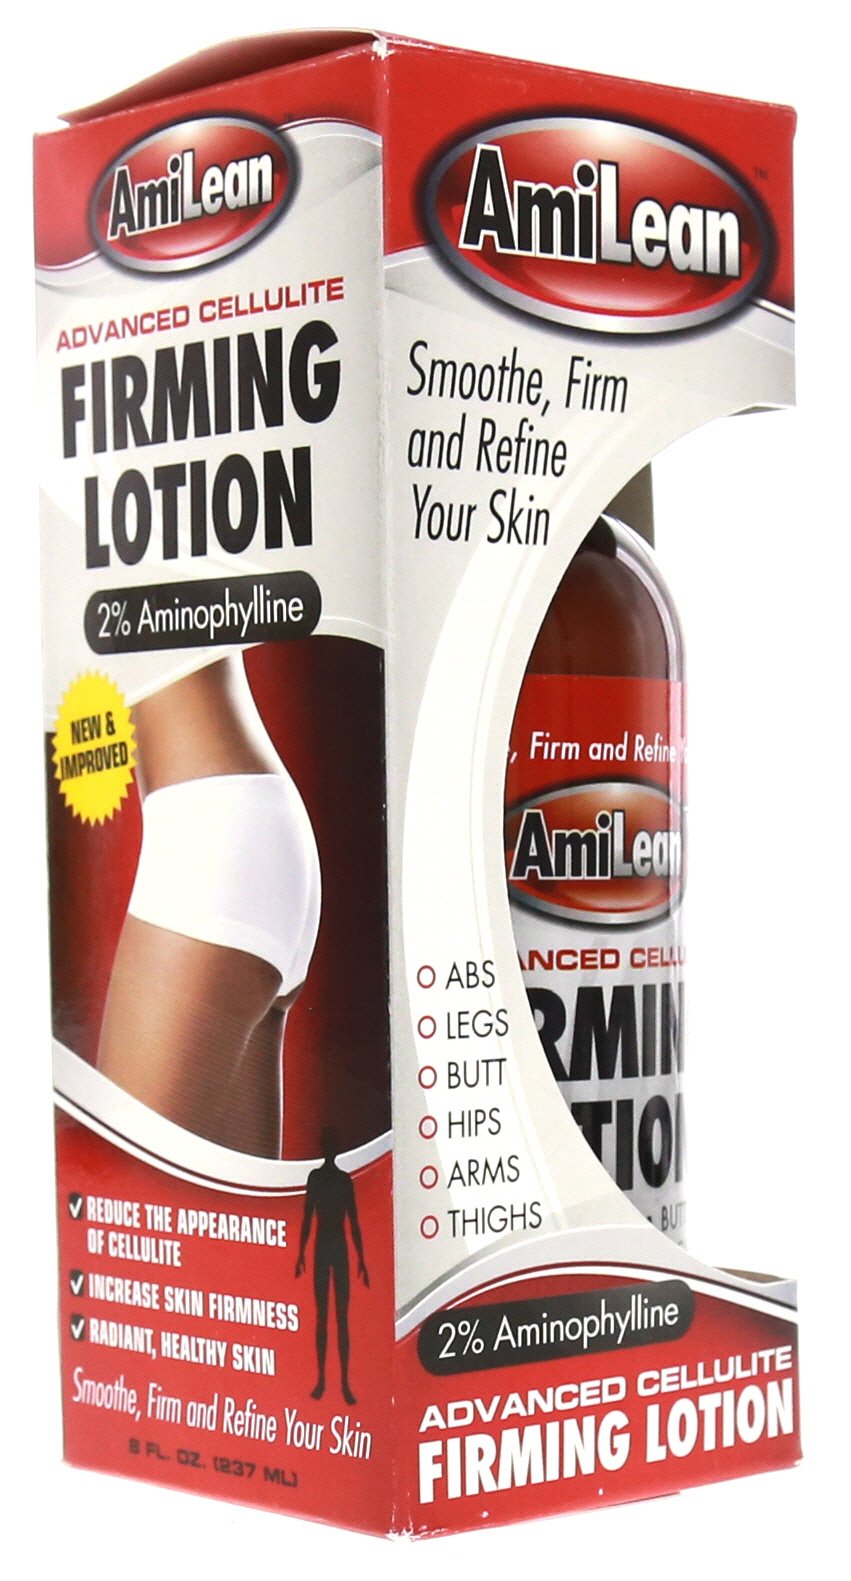 Amilean Cellulite Cream Firming Lotion, Anti-Fat & Anti Cellulite Formula, 8 fl. oz